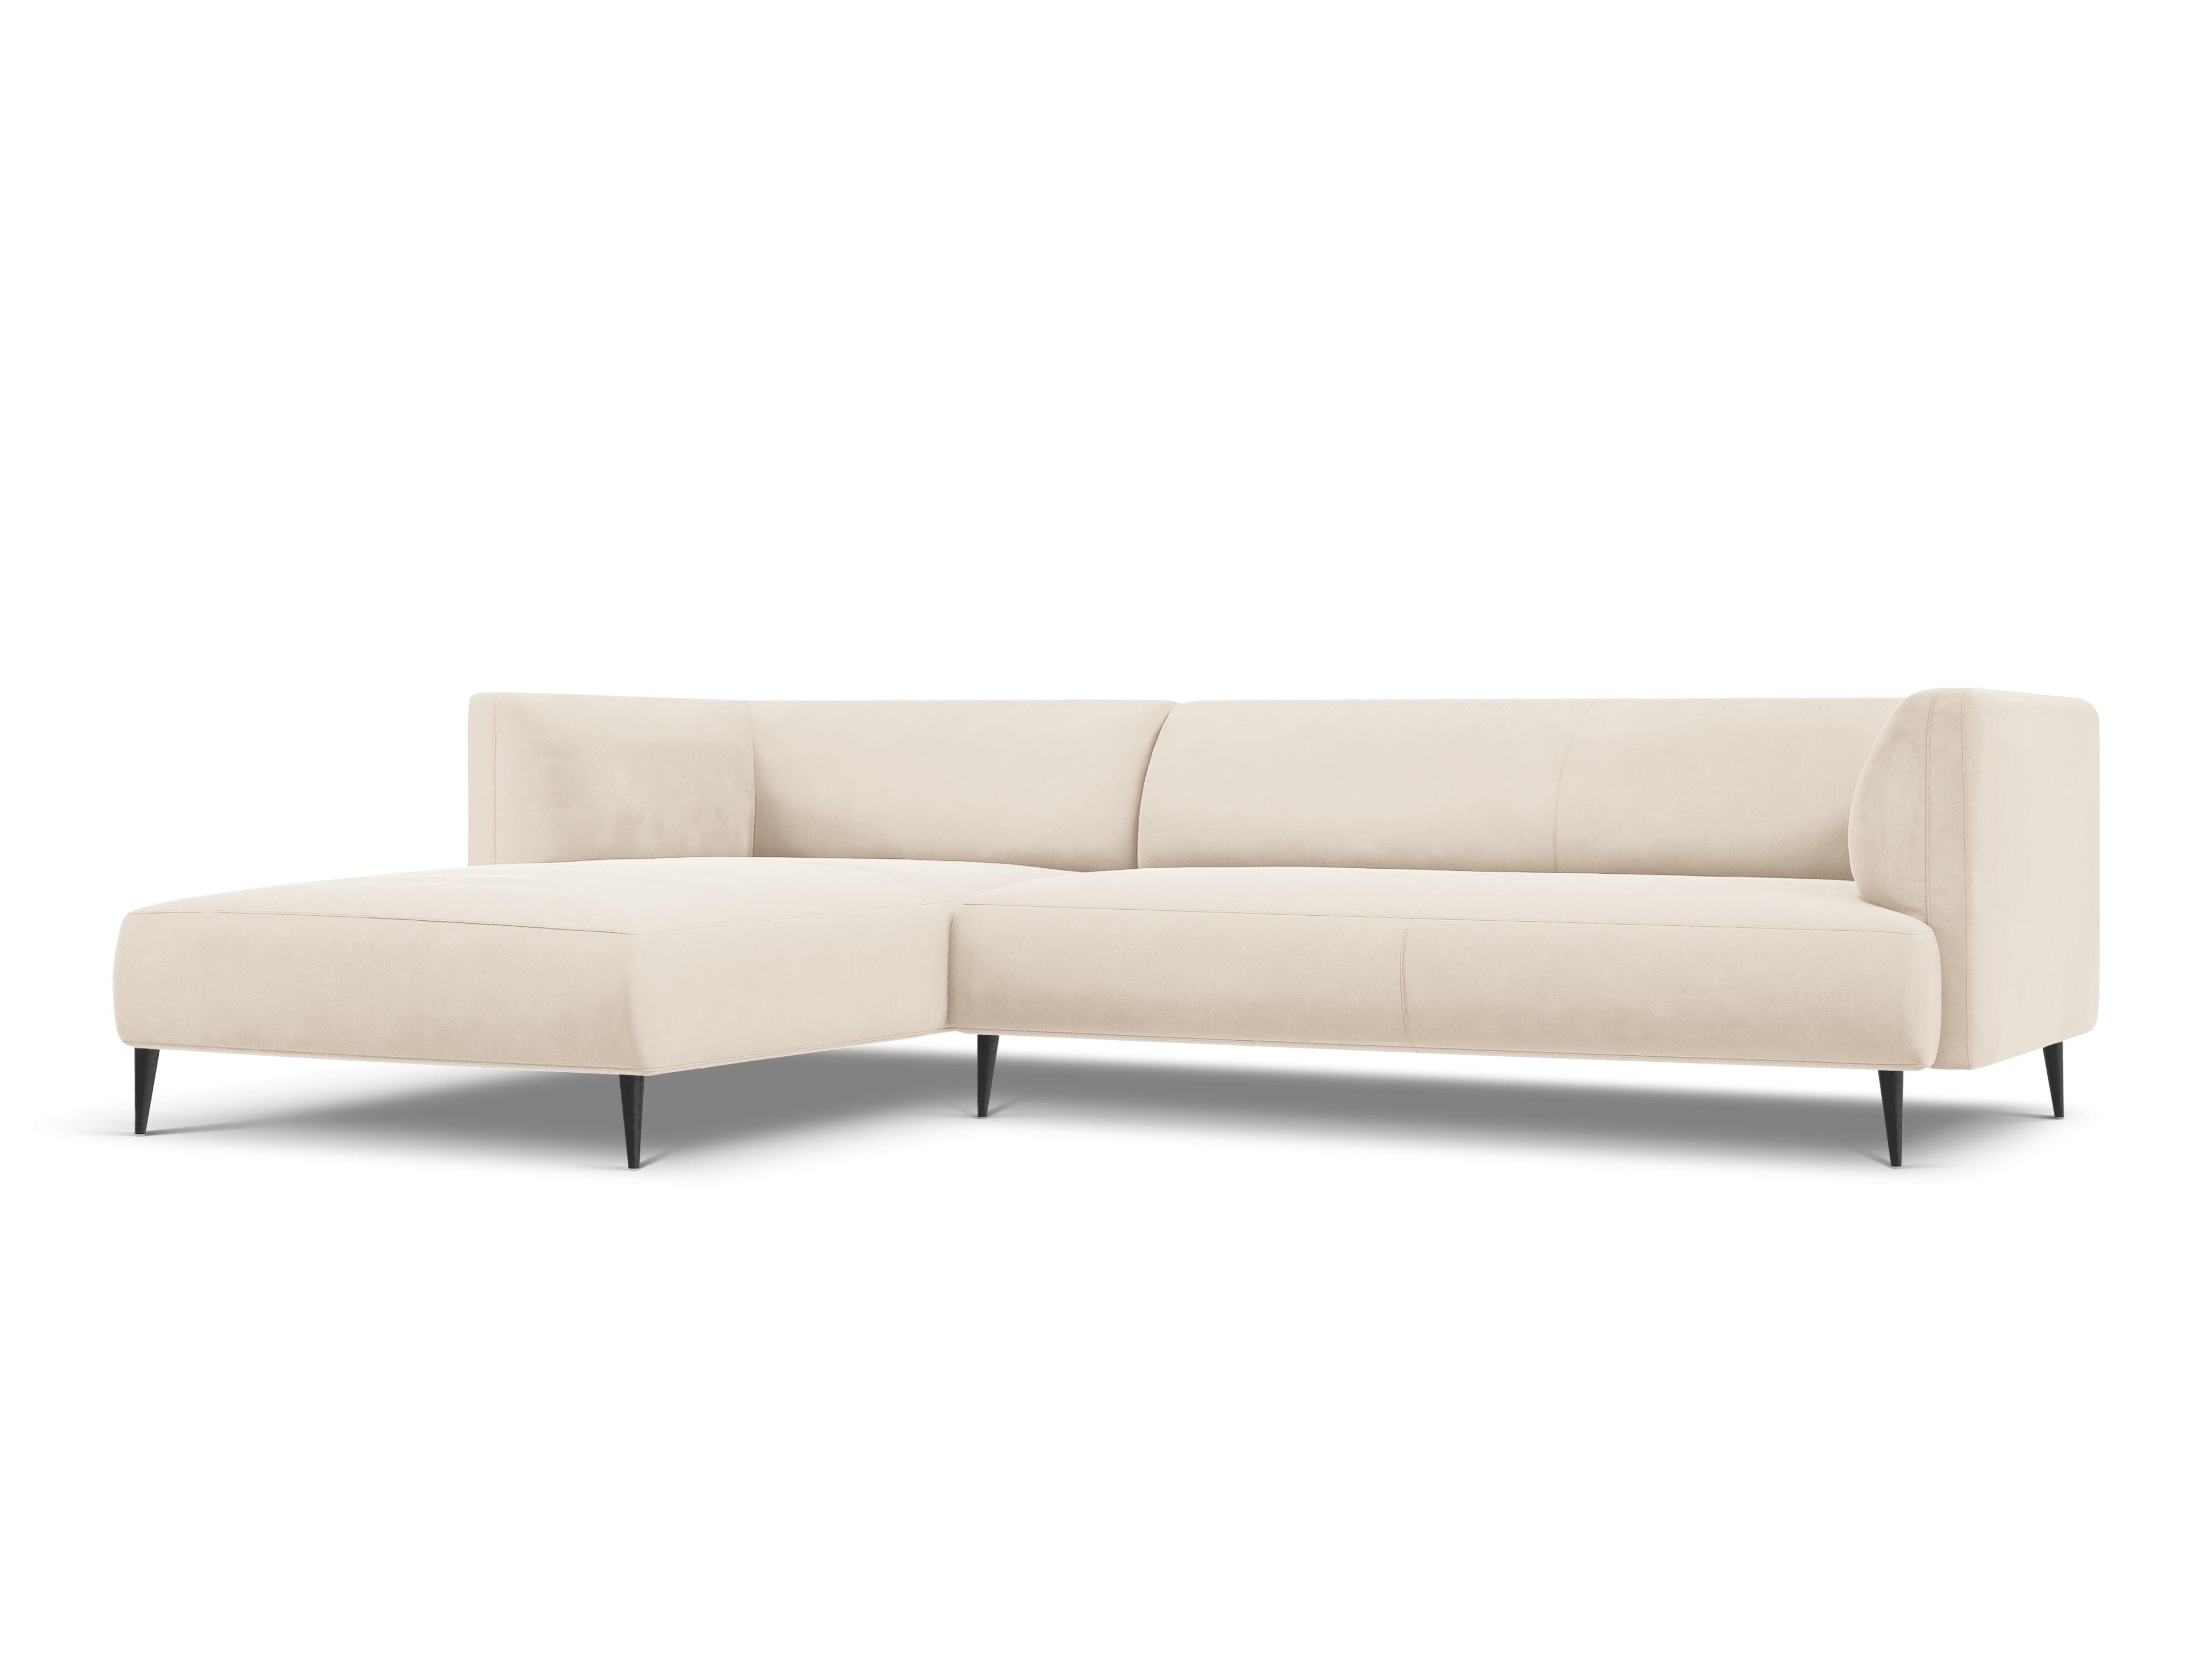 Velvet Left Corner Sofa, "Selena", 4 Seats, 255x165x70
Made in Europe, Micadoni, Eye on Design